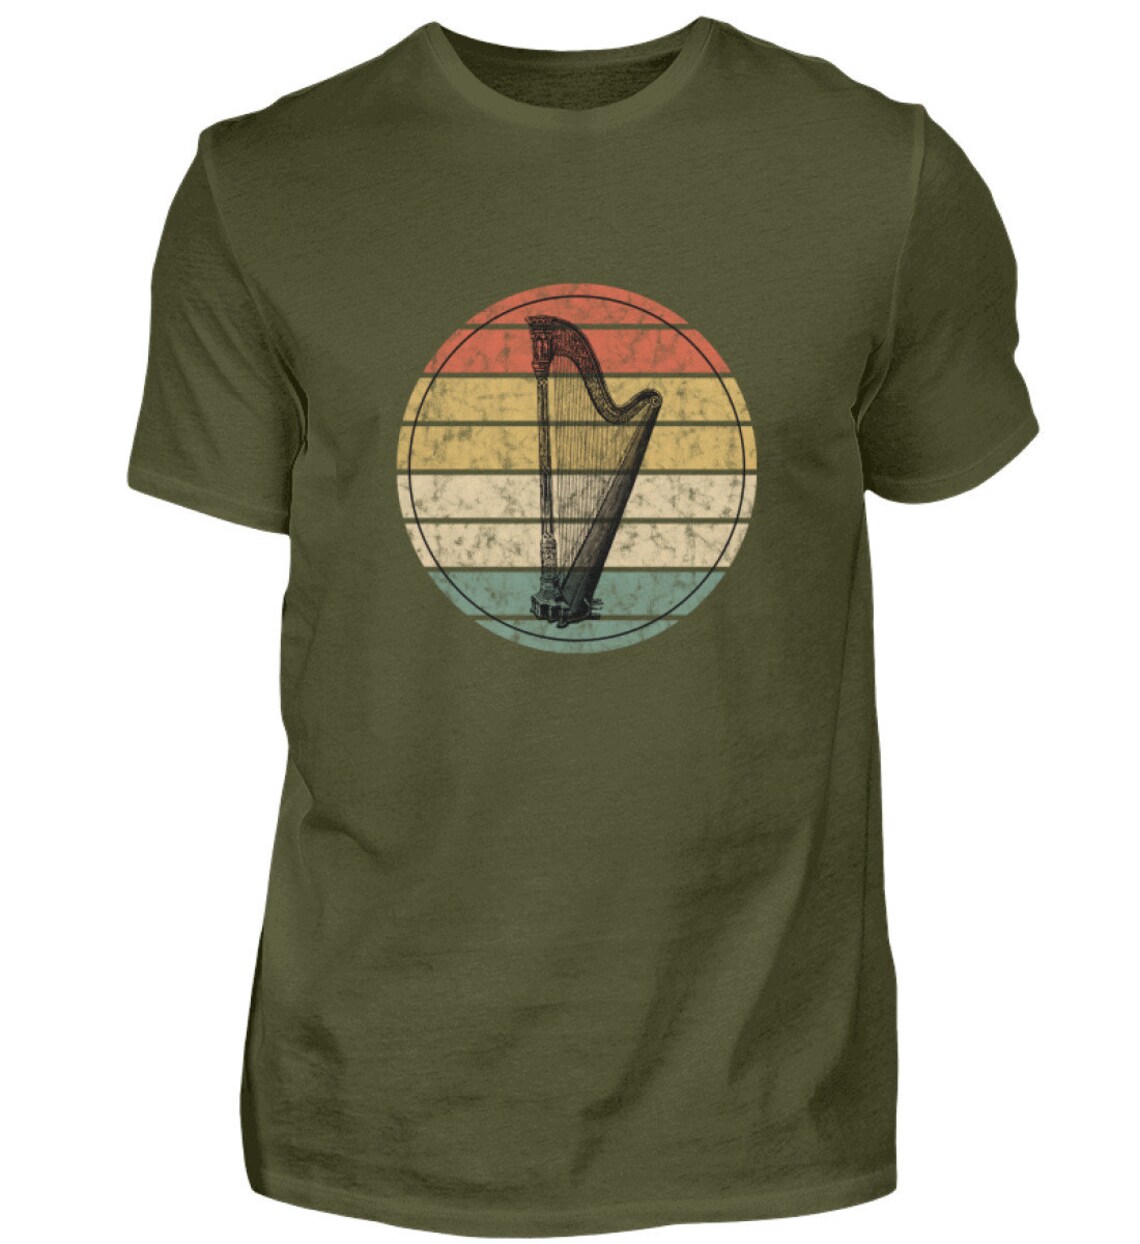 Harp Harp Player Retro Vintage Tshirt T-Shirt Shirt | Etsy